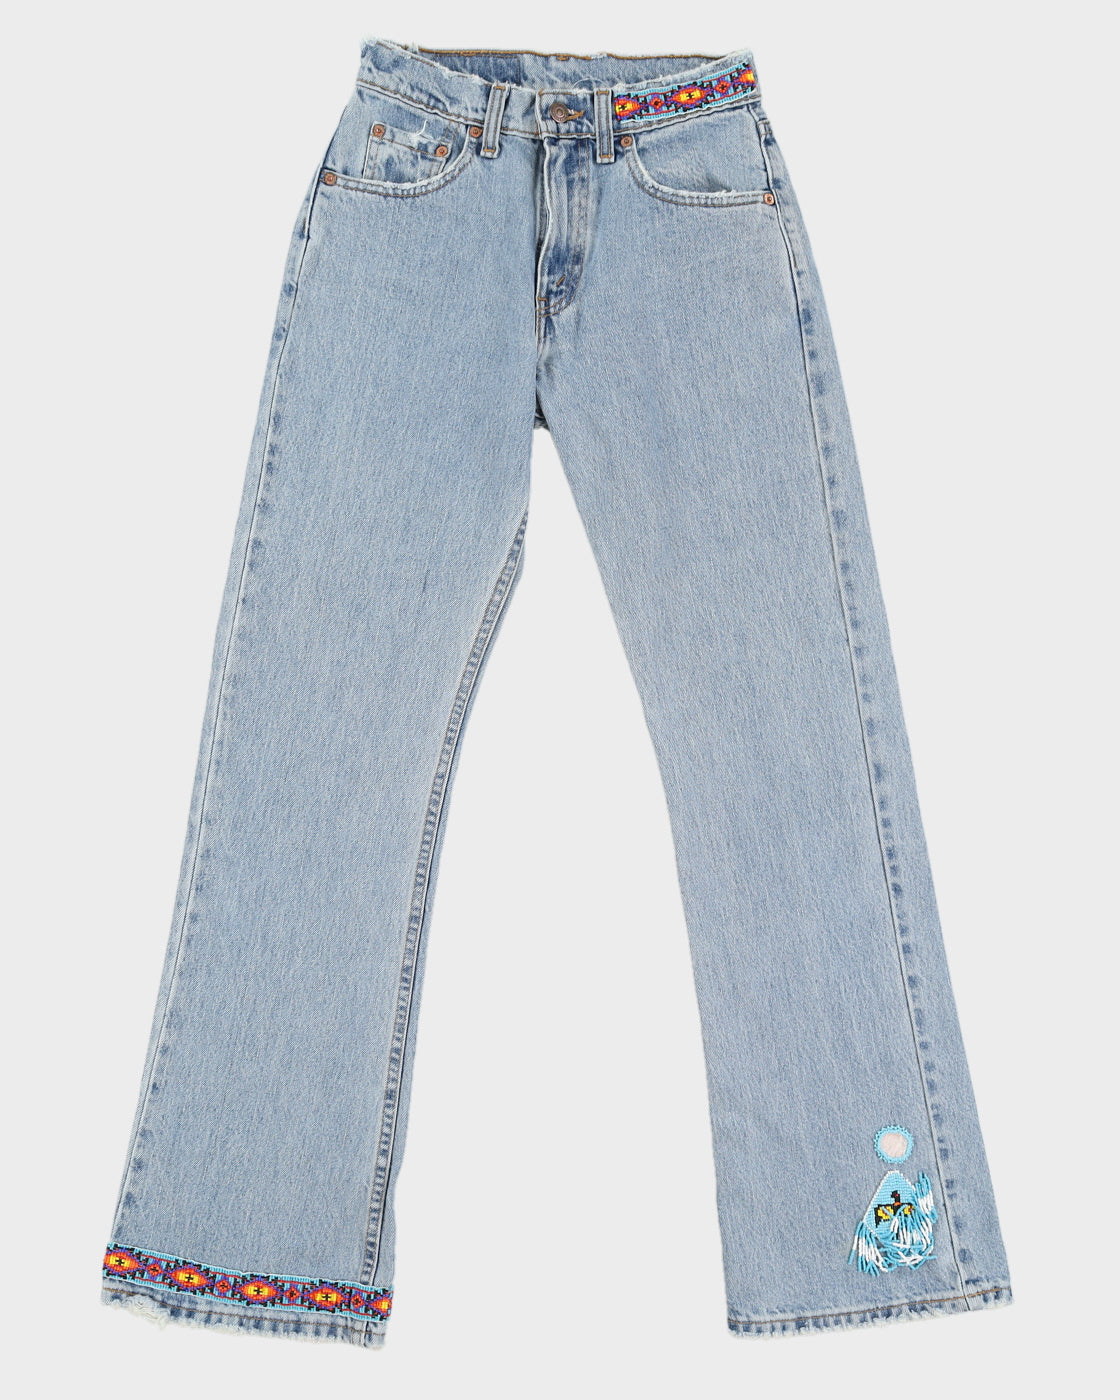 Vintage 90s Levi's Light Wash 511 Denim Jeans With Beaded Detail - W27